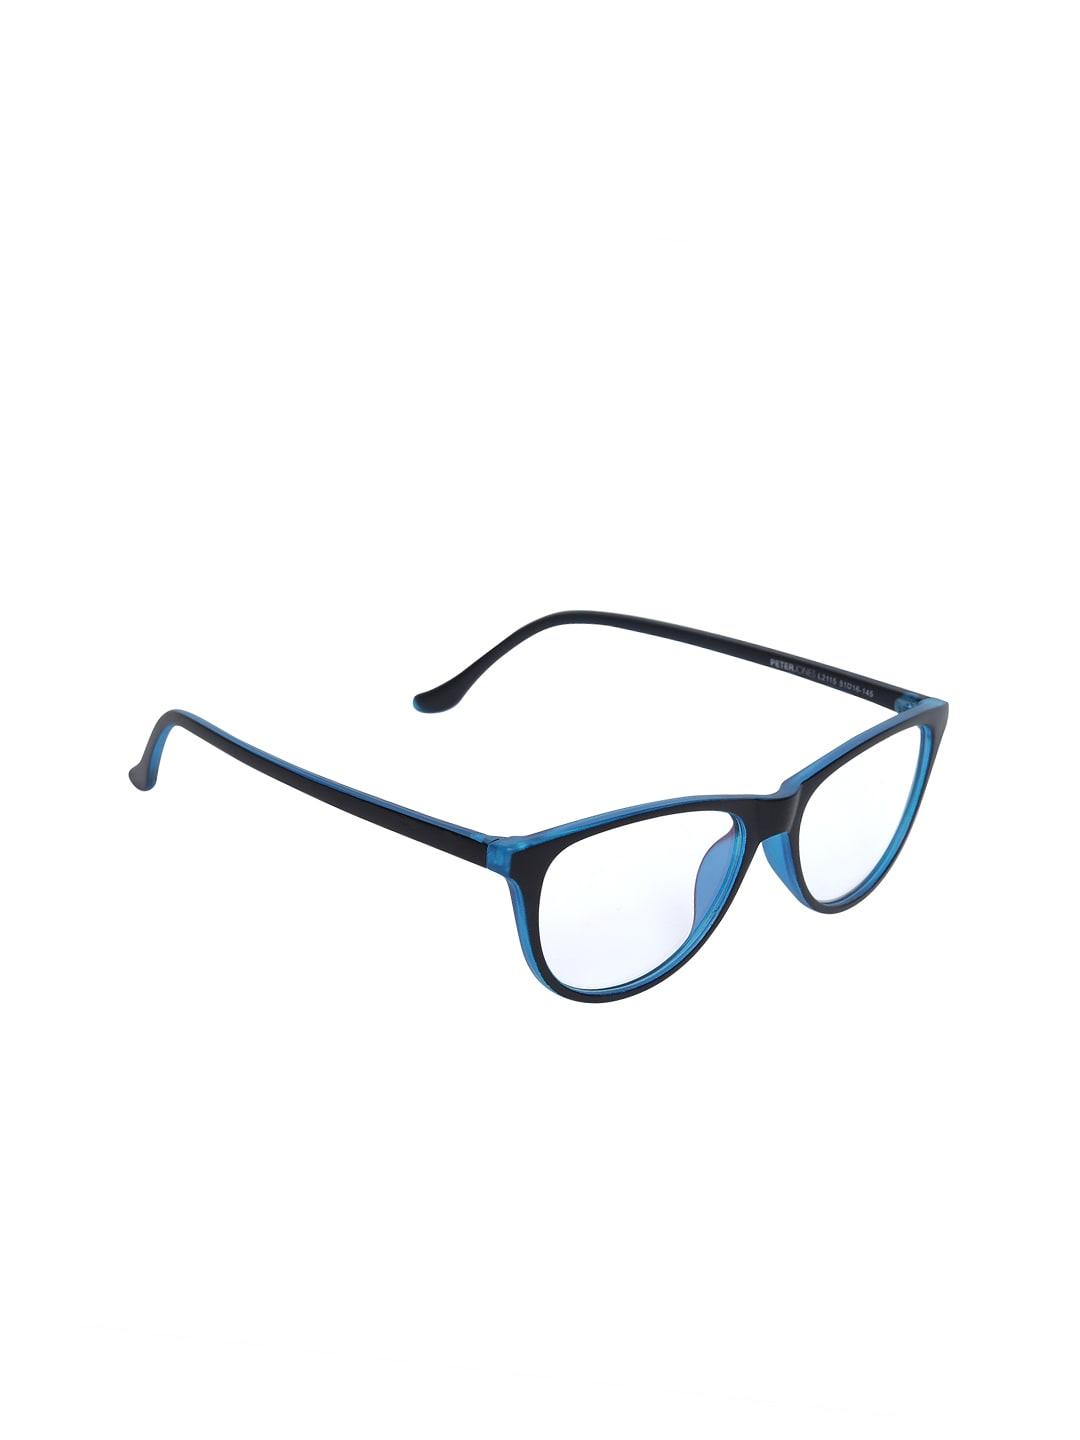 peter jones eyewear unisex black & blue solid full rim cateye frames